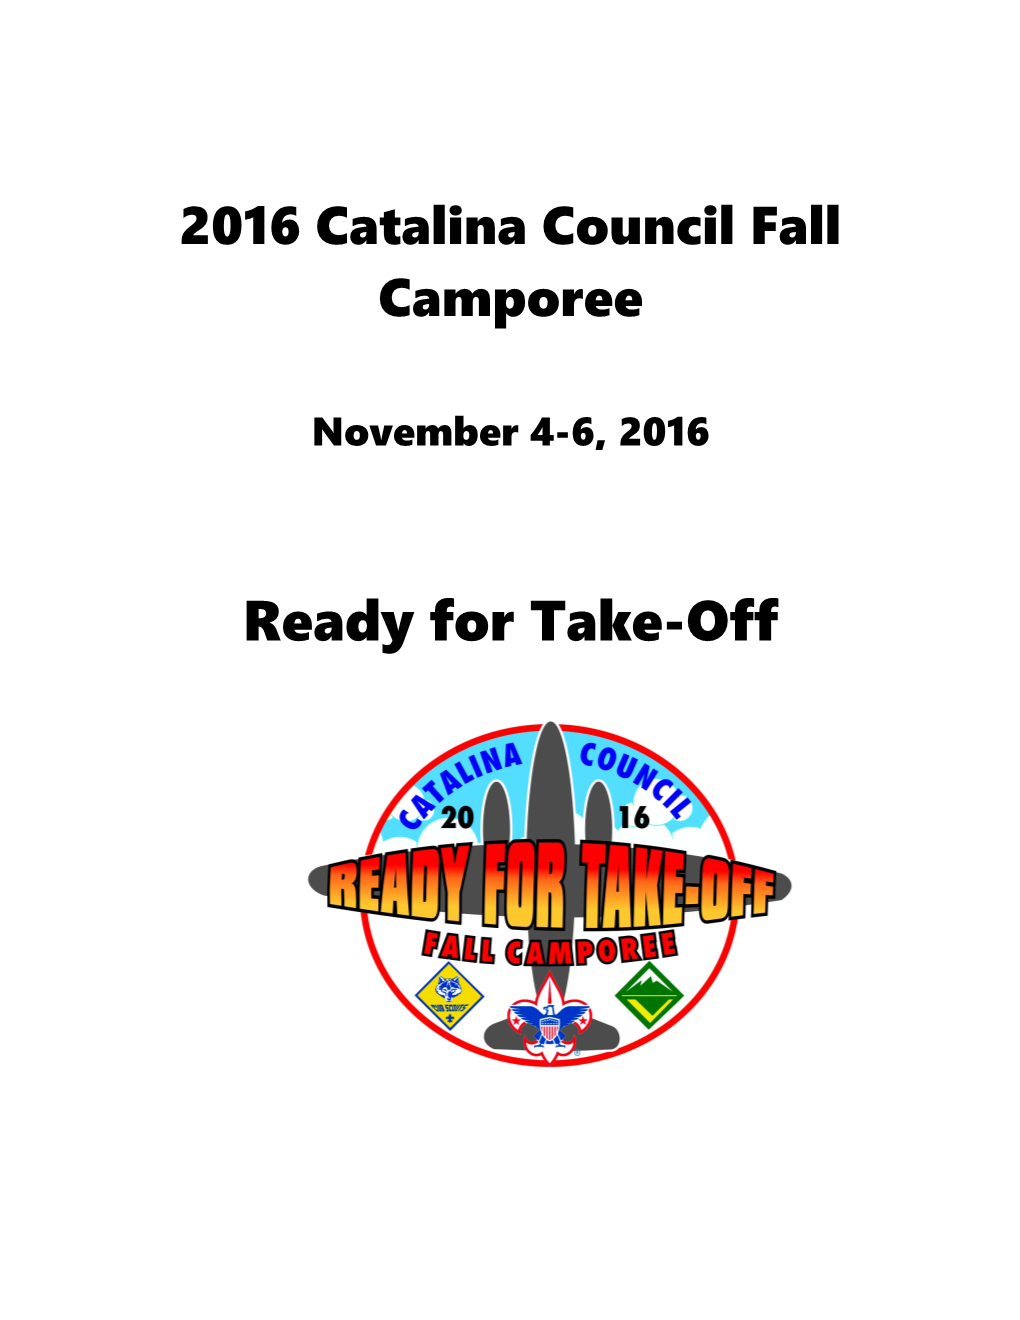 2016 Catalina Council Fall Camporee